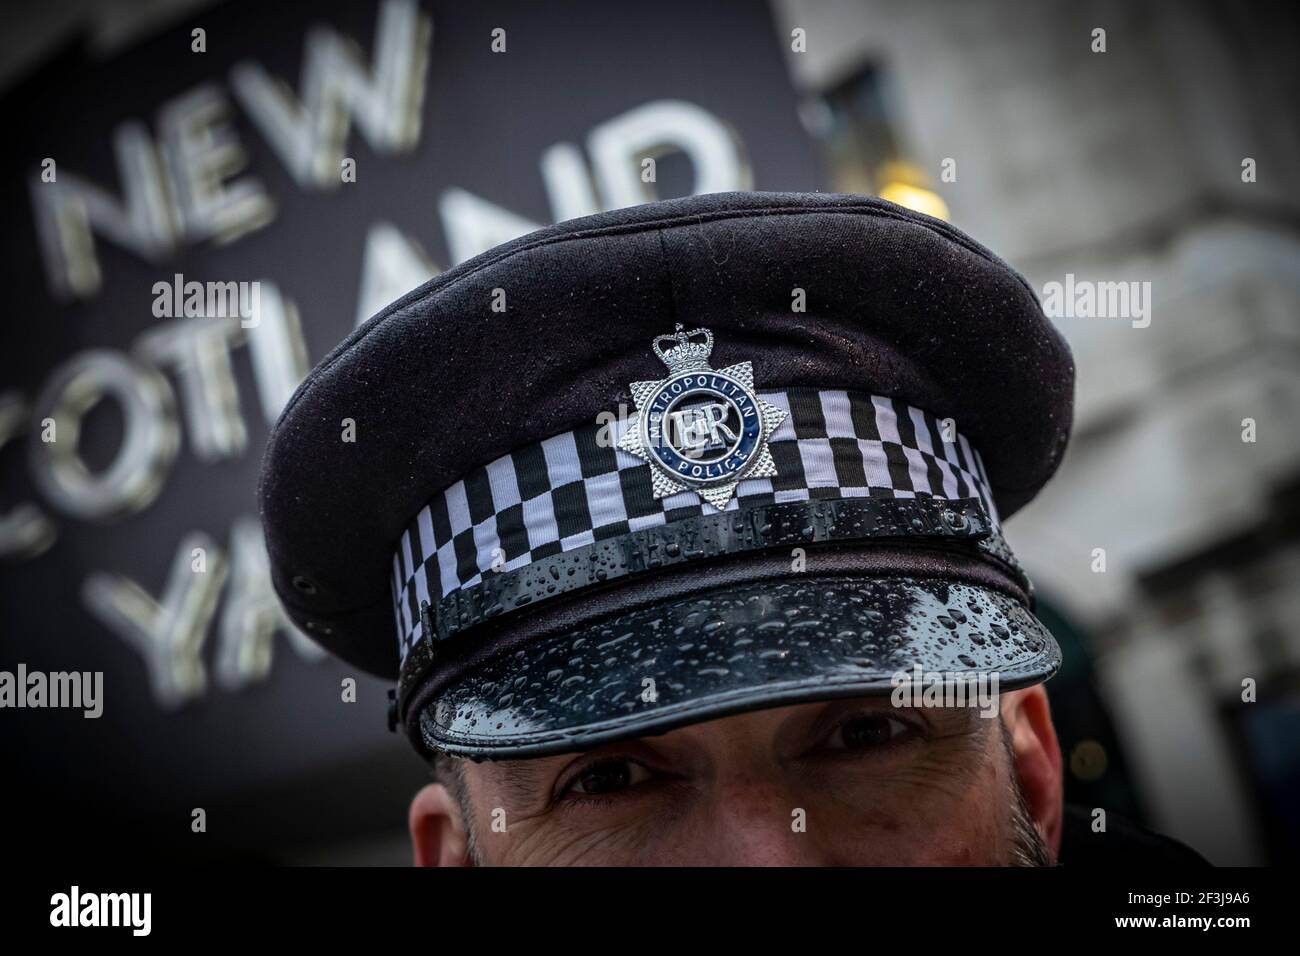 Metropolitan Police Officer wearing a cap at scotland yard Photography by Jason Bye t:  07966 173 930 e: mail@jasonbye.com w: http://www.jasonbye.com Stock Photo